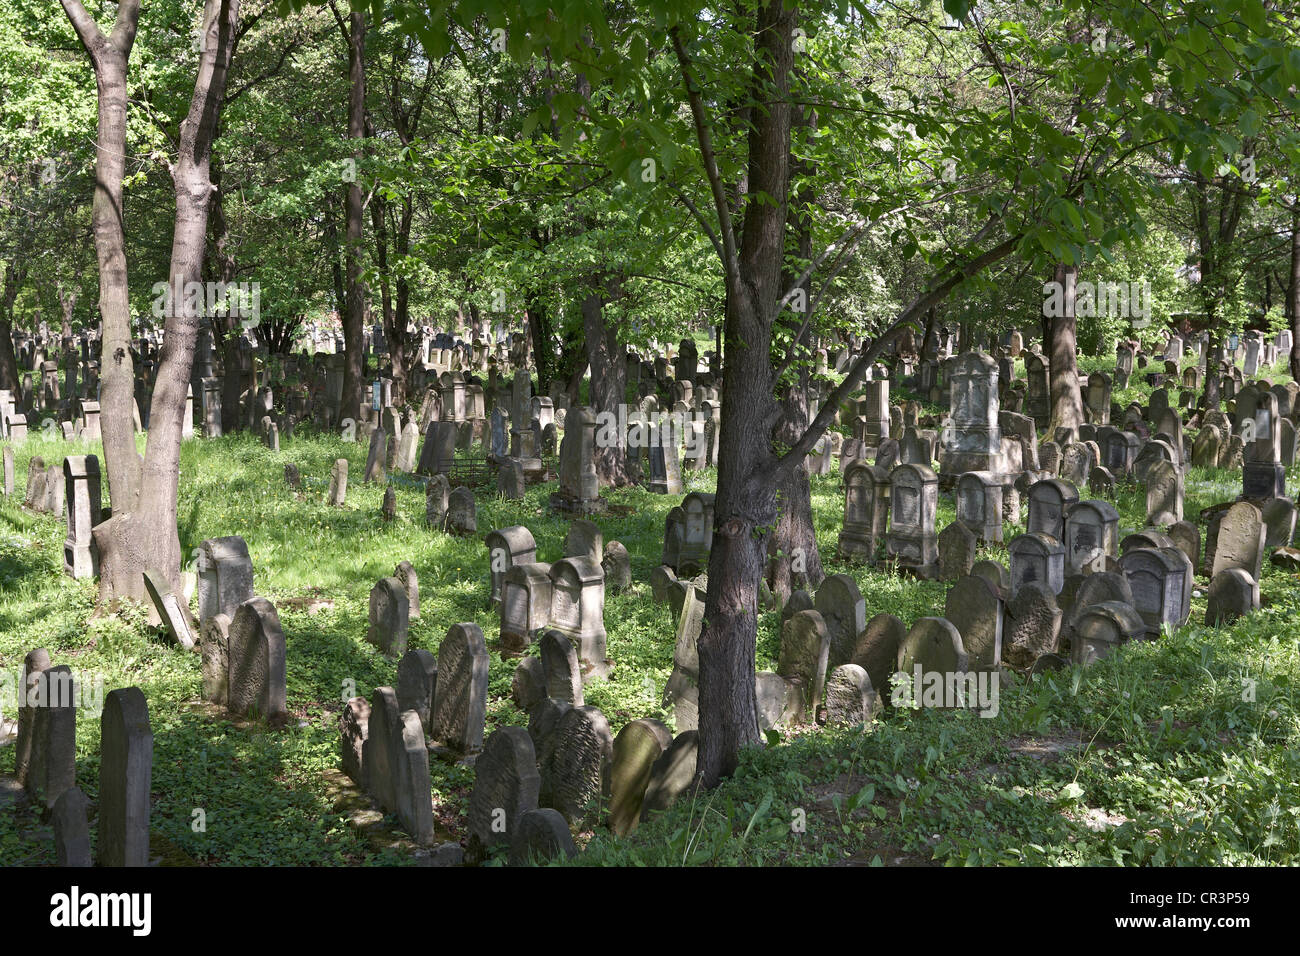 Eastern Europe Poland Malopolska Tarnow Jewish Cemetery established in 1580s now closed. Stock Photo